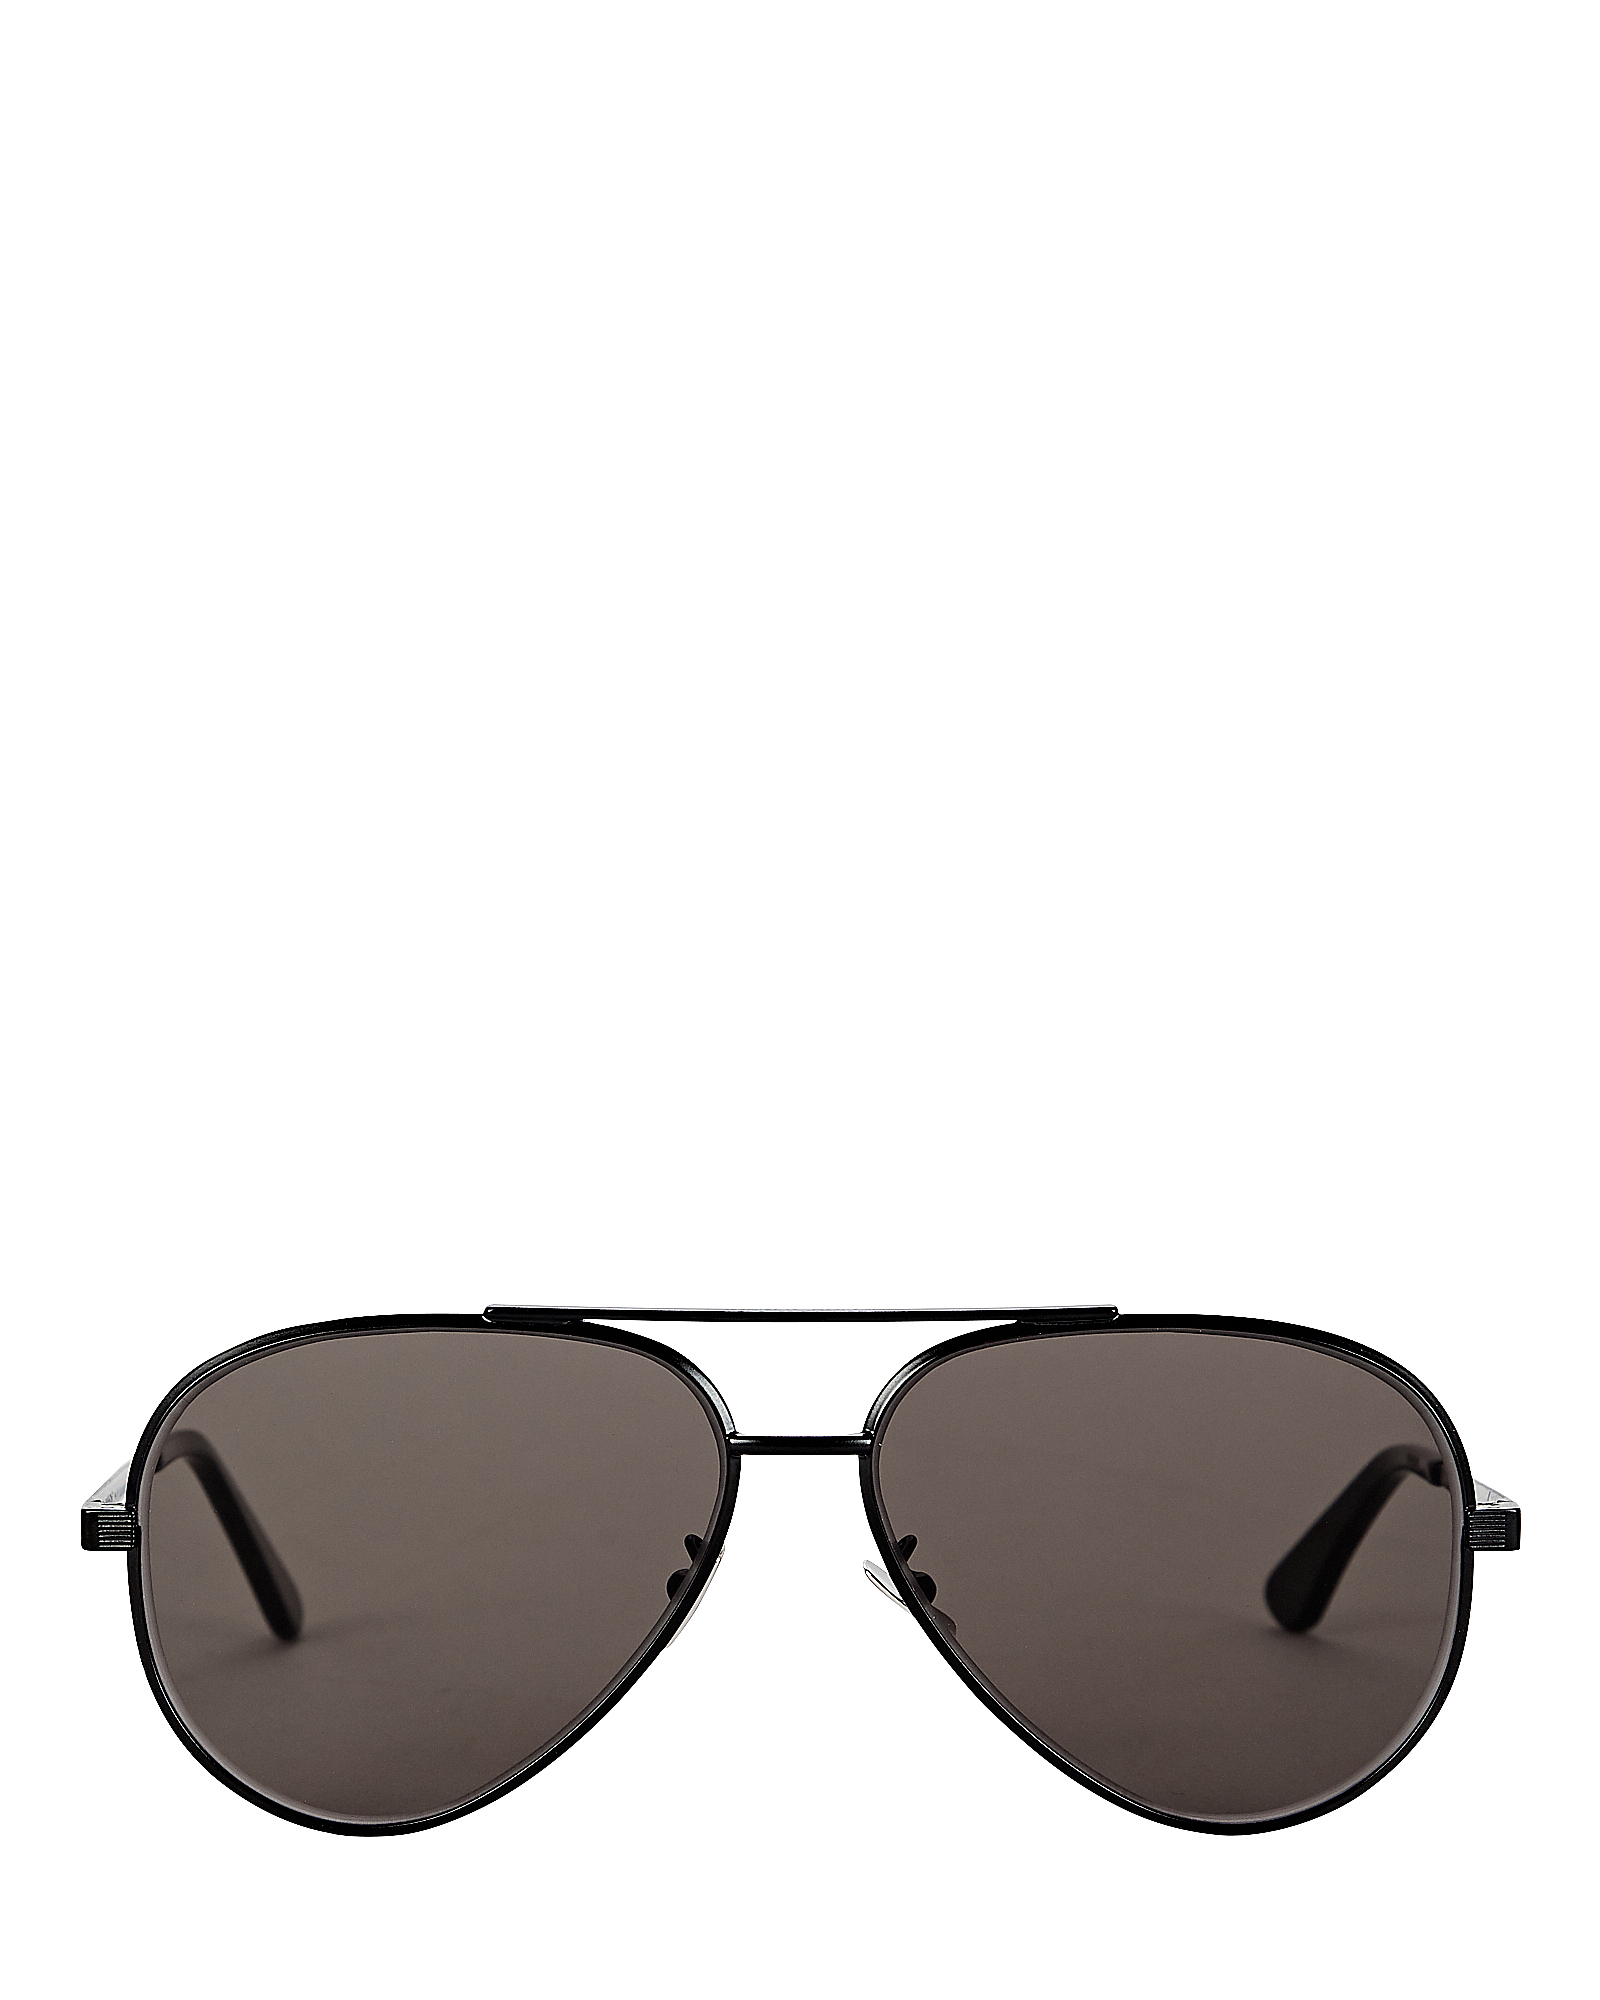 SAINT LAURENT Classic 11 Zero Aviator Sunglasses,060050755428